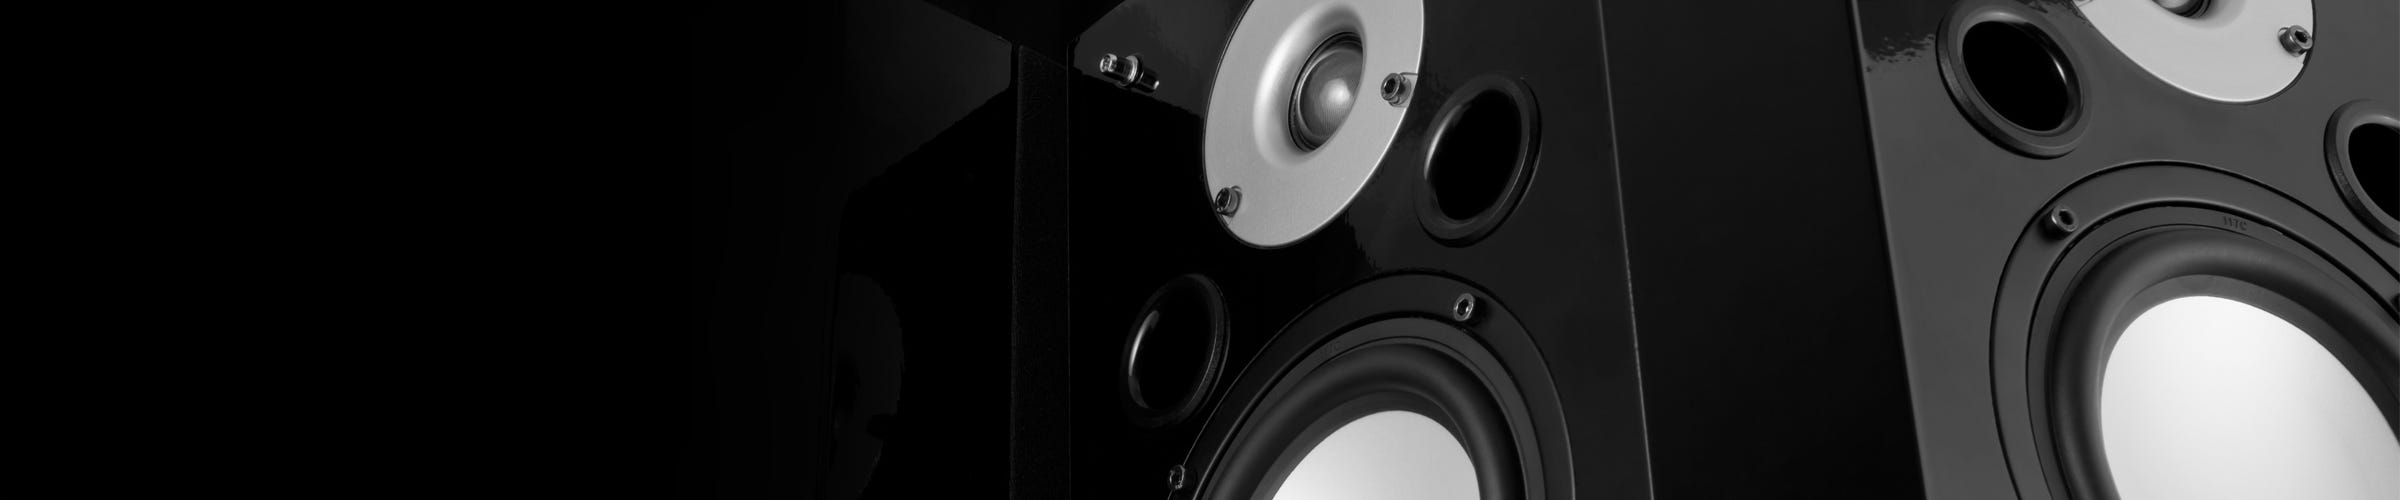 XLBP-DW Bipolar Surround Sound Speakers Intro